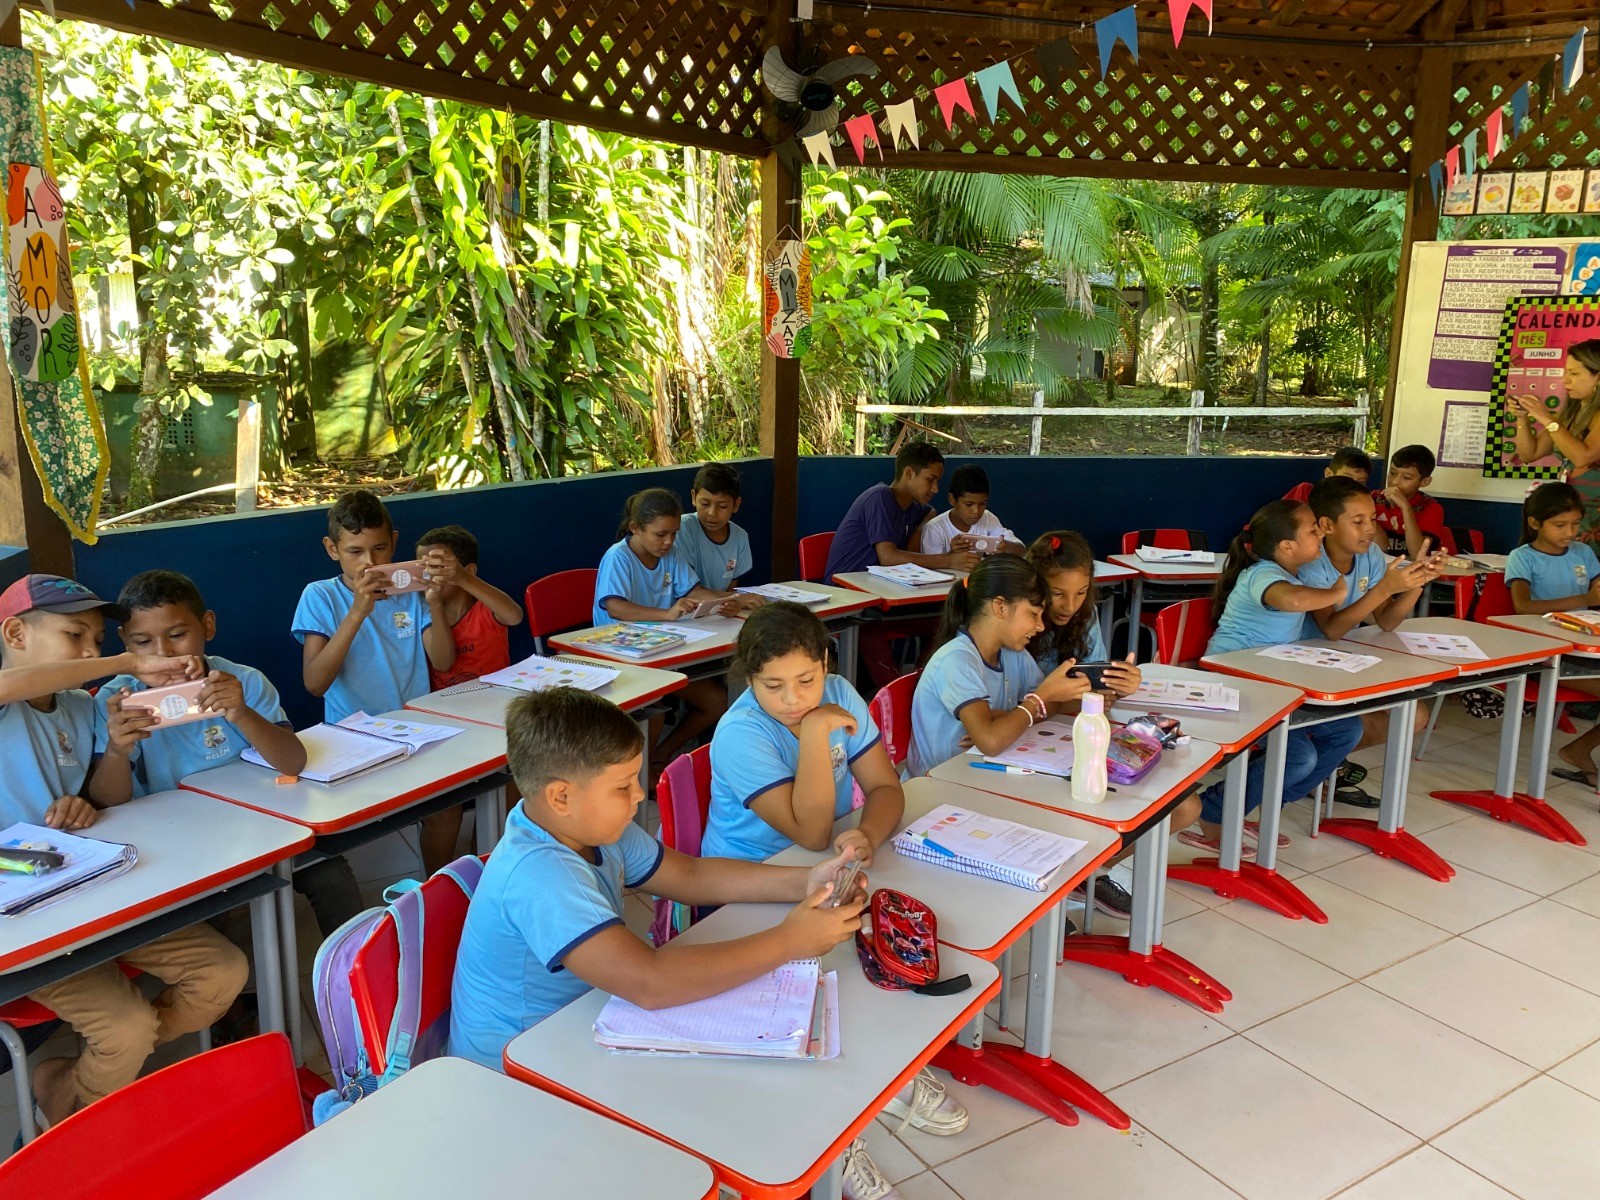 Prefeitura de Belém entrega o kit Matematicando para as escolas